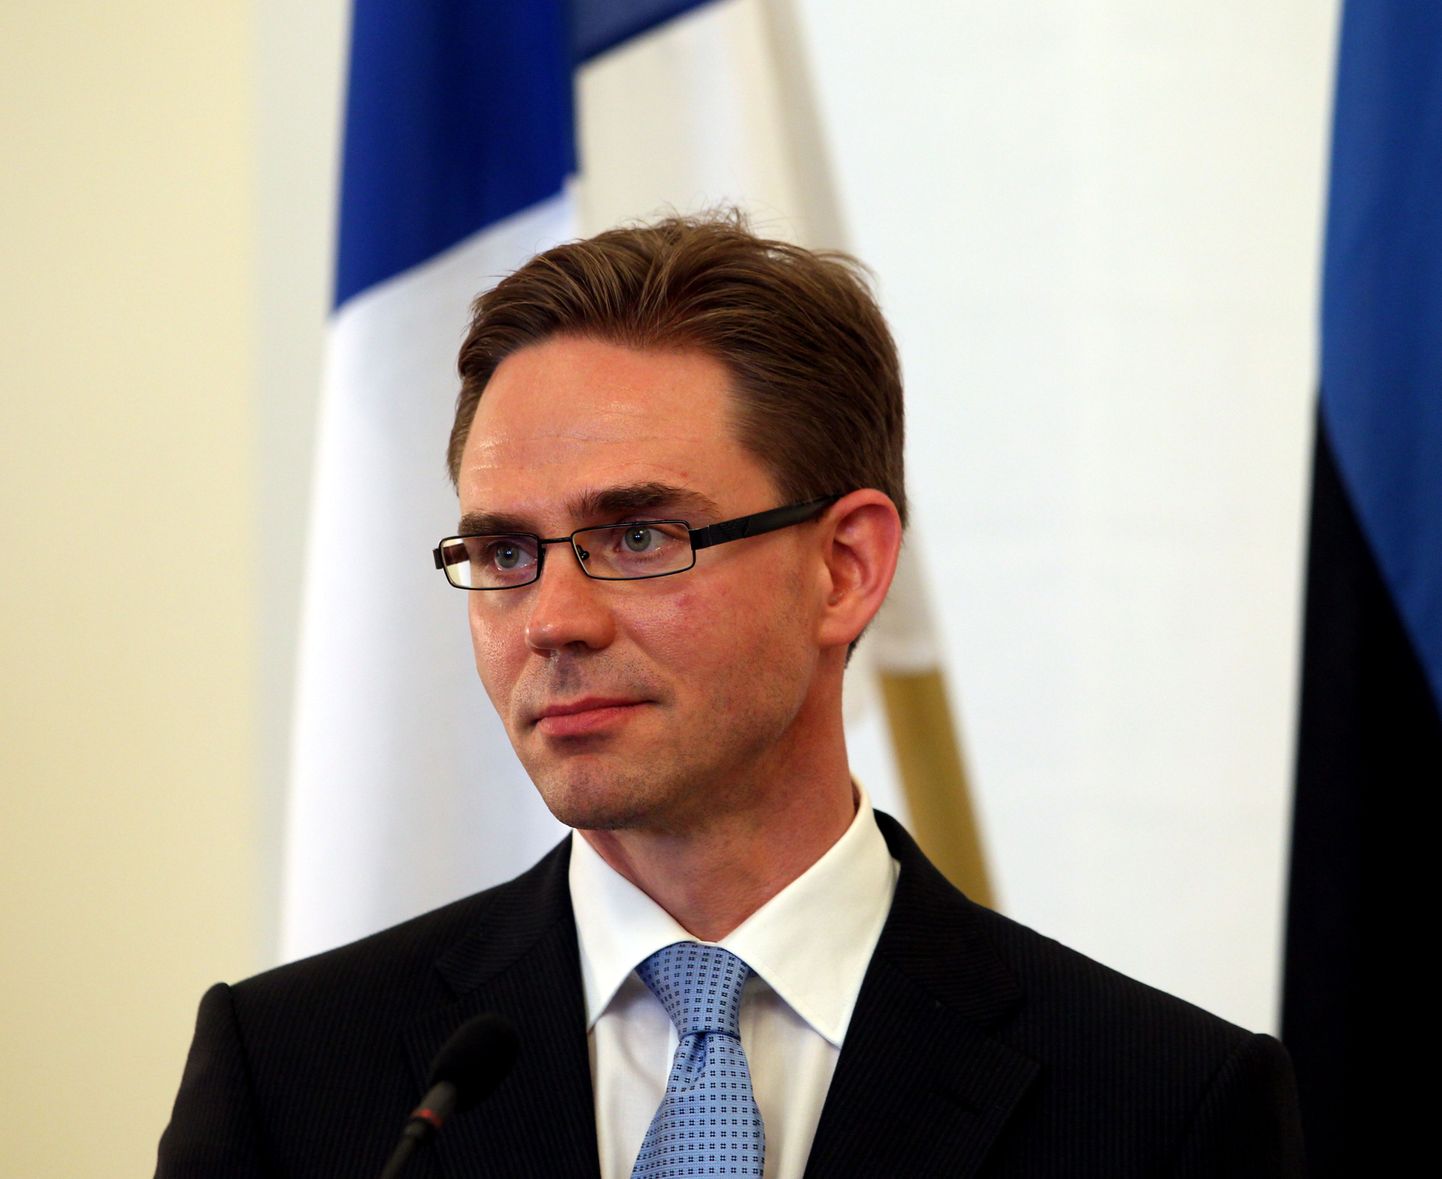 Soome peaminister Jyrki Katainen